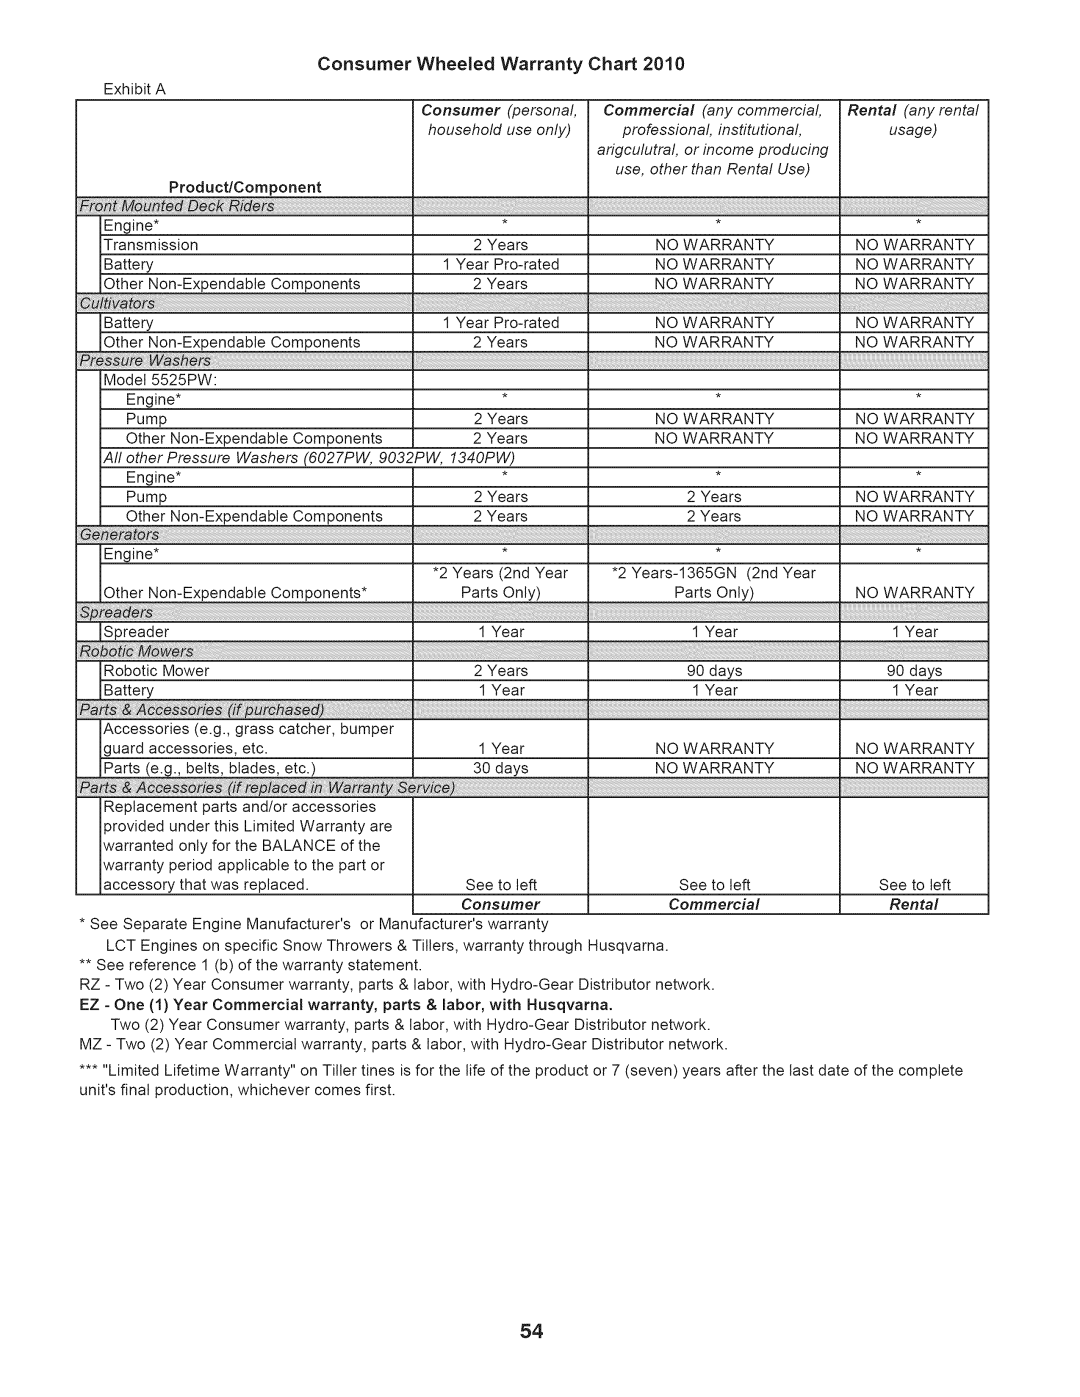 Husqvarna LTH18538 owner manual Consumer Wheeled Warranty Chart, tic _, w_rs 